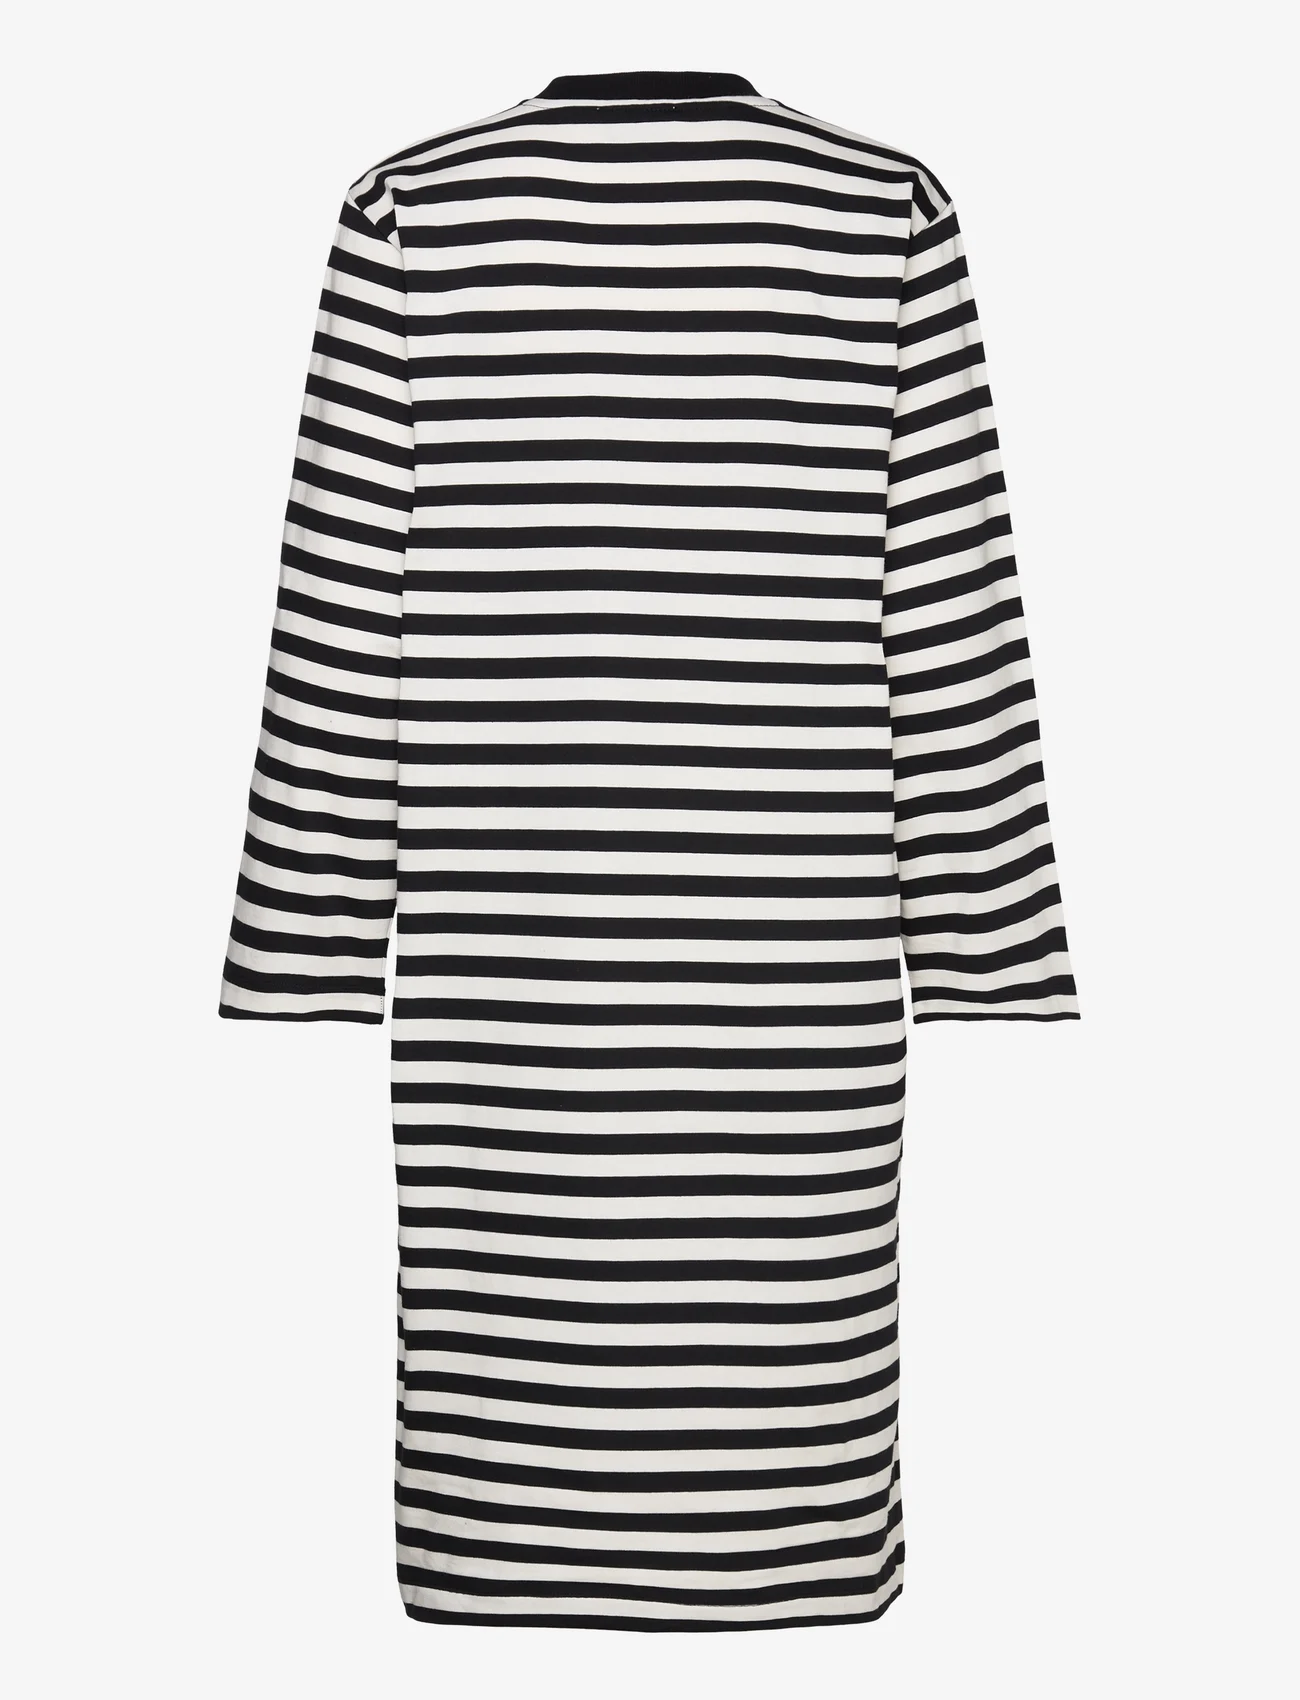 Mads Nørgaard - Heavy Single Stripe Nolly Dress - t-shirt dresses - black/snowwhite - 1